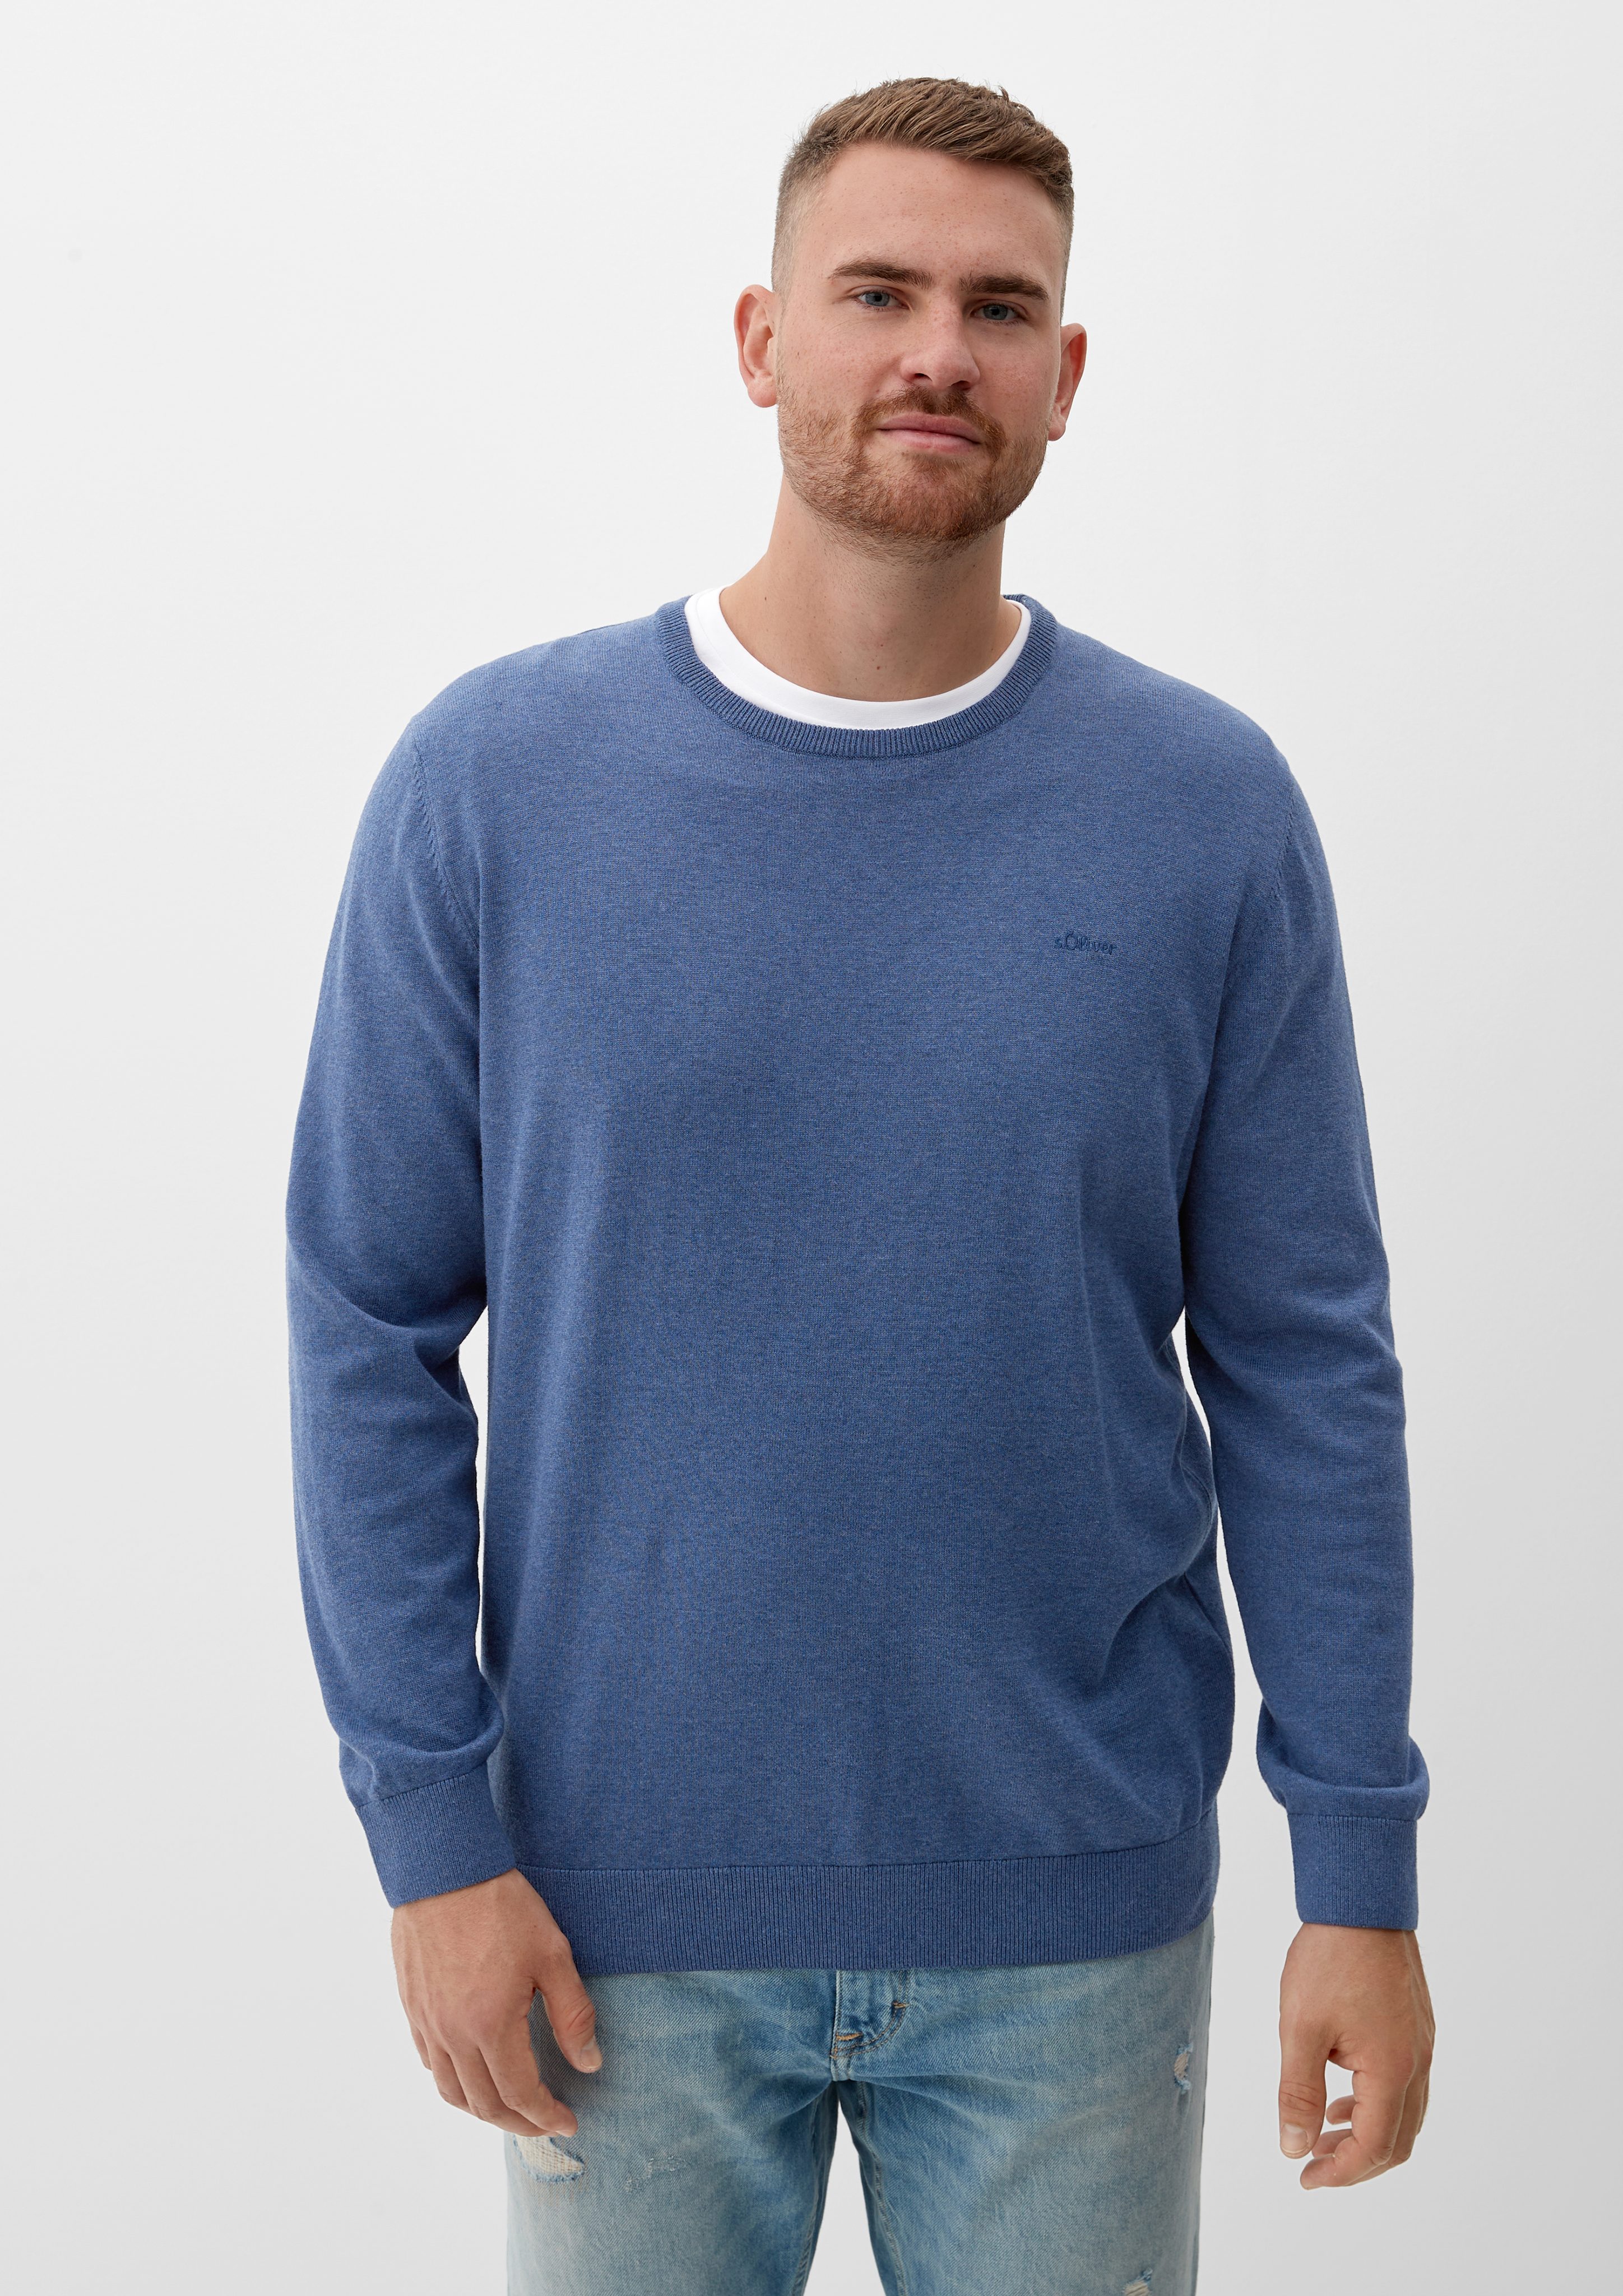 Pullover Logo dunkelblau Strickpullover Feinstrick aus meliert s.Oliver